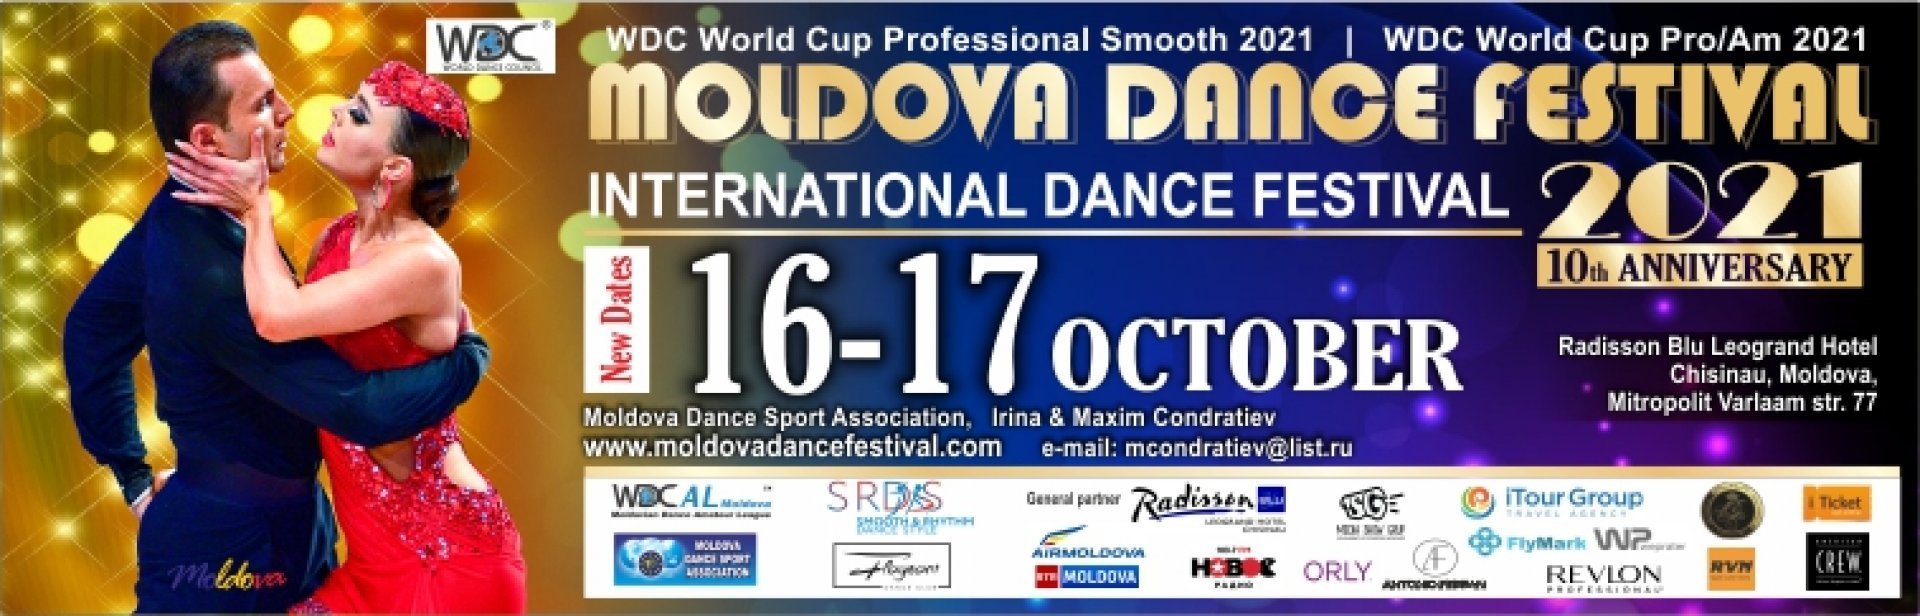 17 Octombrie 19:30 Moldova Dance Festival - ONLINE 